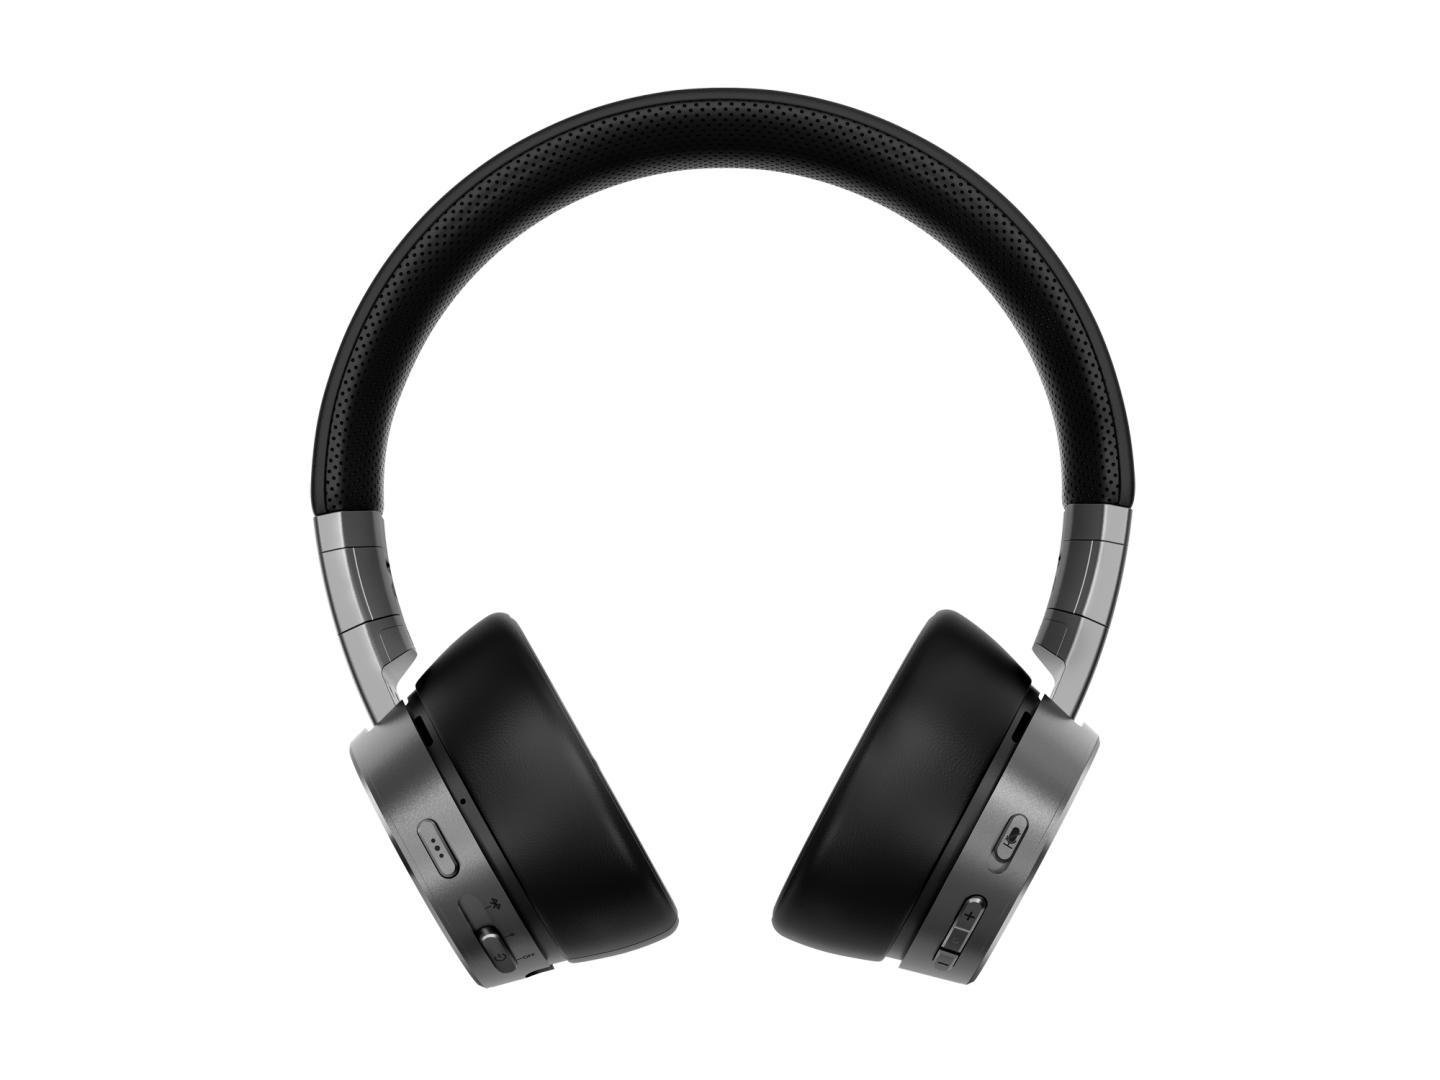 Lenovo ThinkPad X1 Active Noise Cancellation Headphones, Bluetooth 5.0, Battery